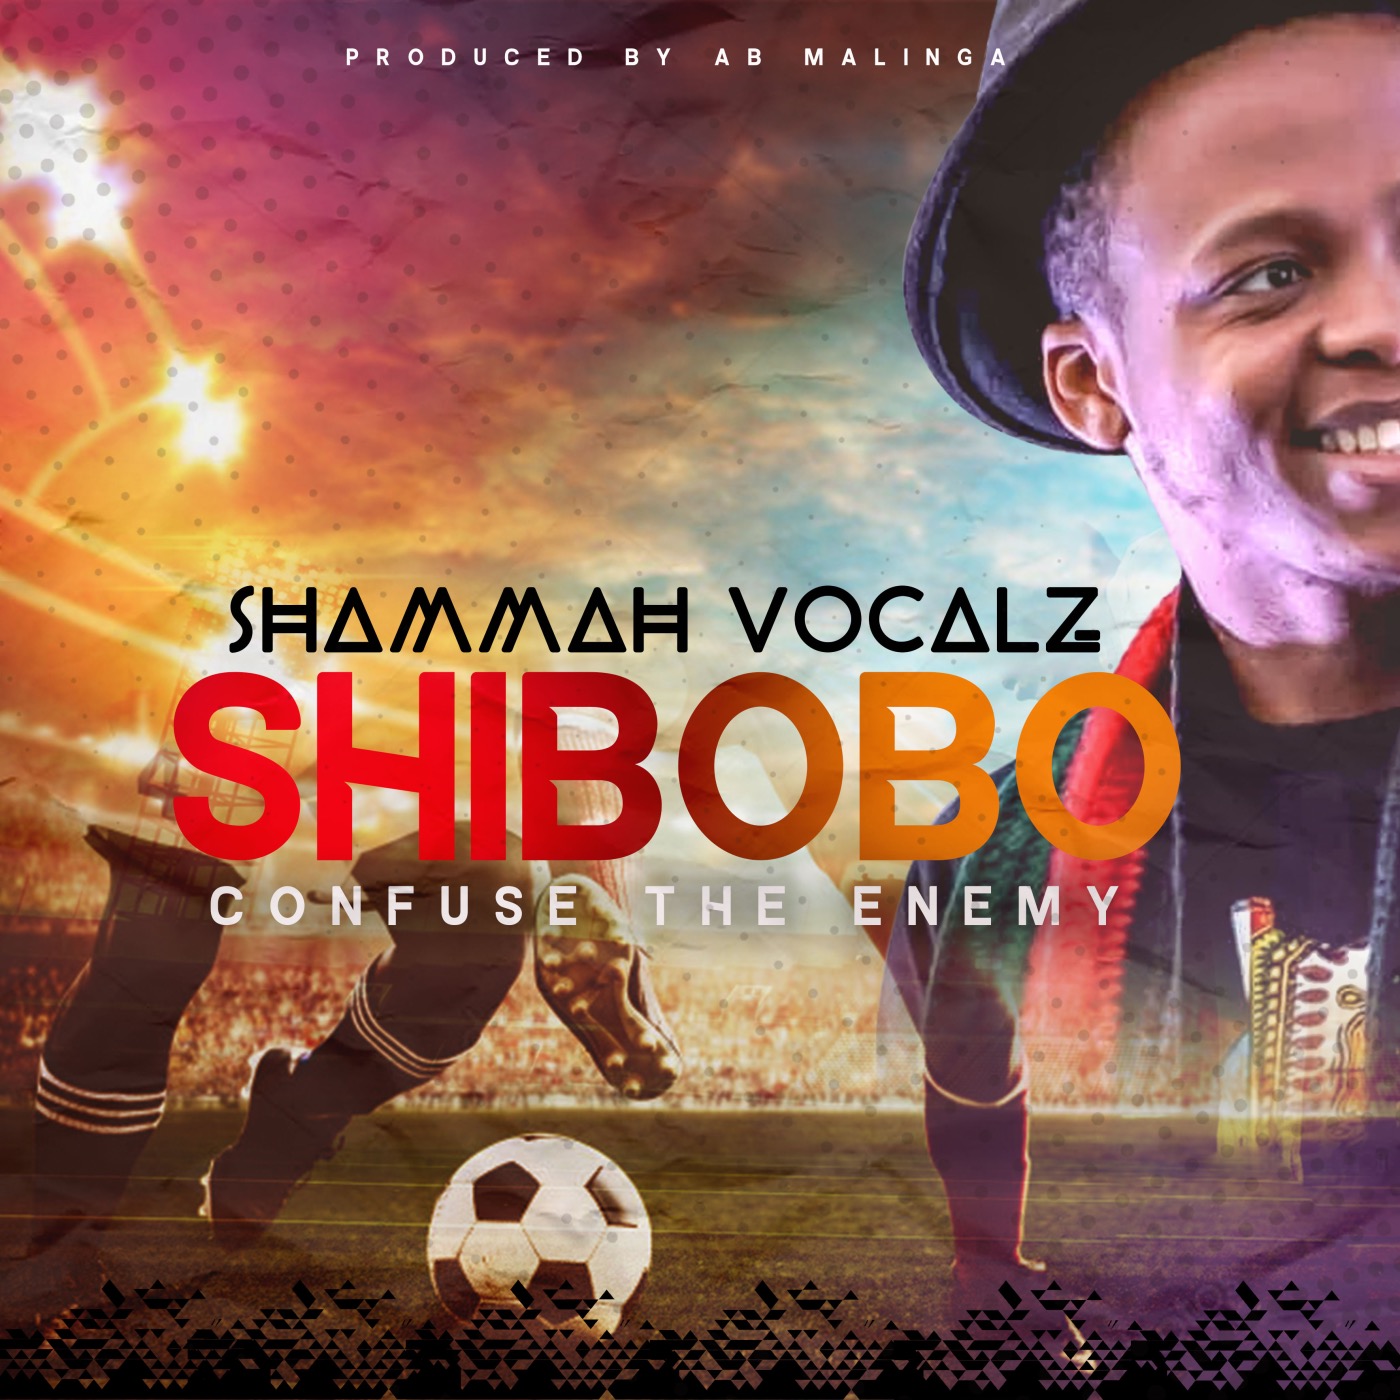  [Music Download] Shammah Vocalz – Shibobo